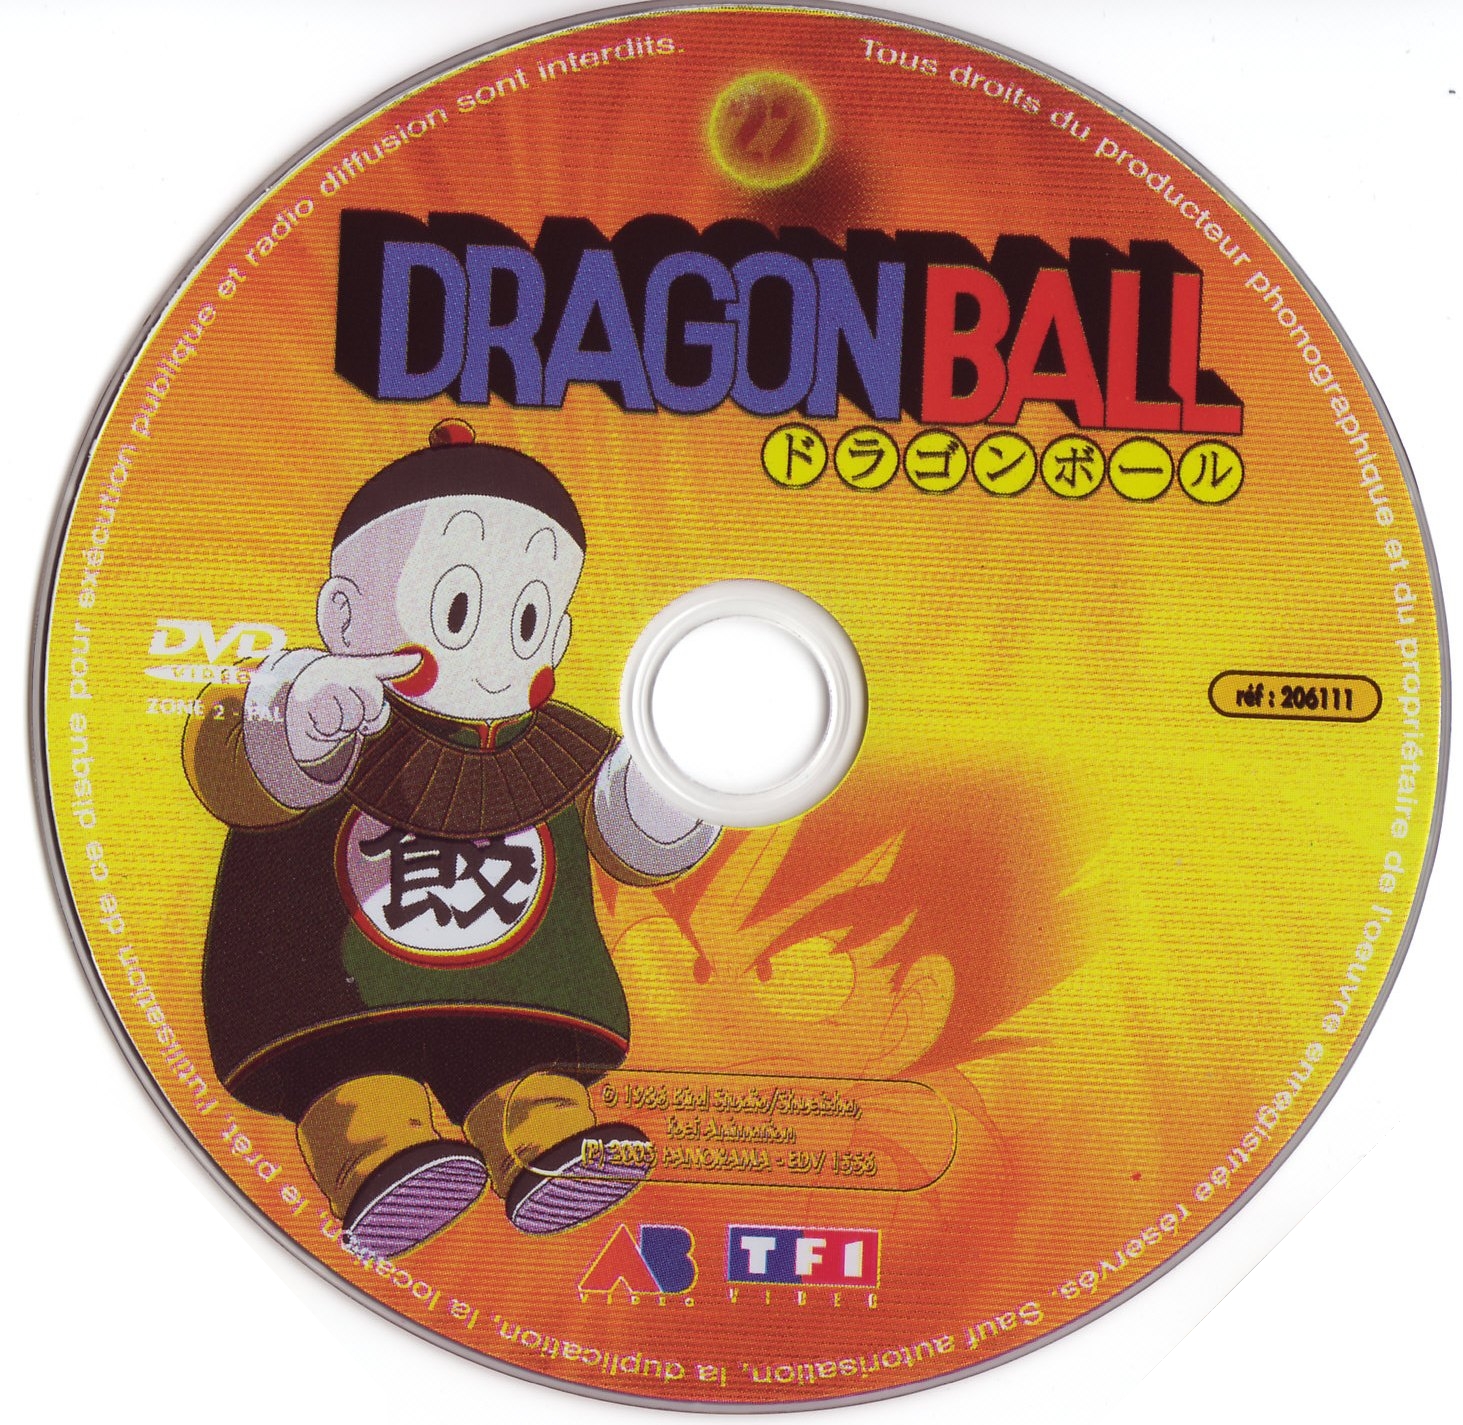 Dragon ball vol 22